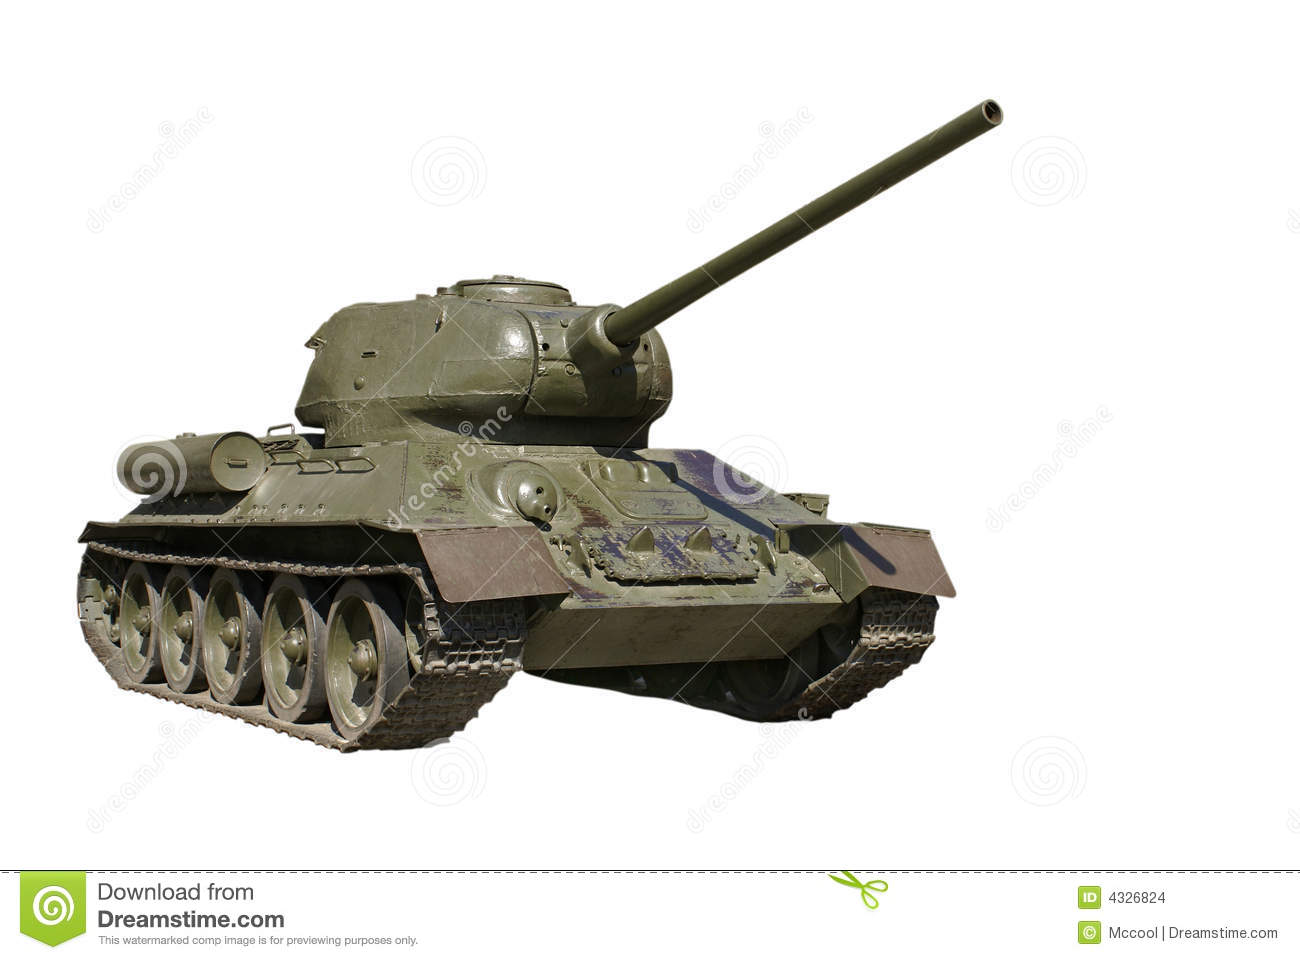 Heavy Tank Is Battle Tank  1943 45  From The Second World War  Wwii    